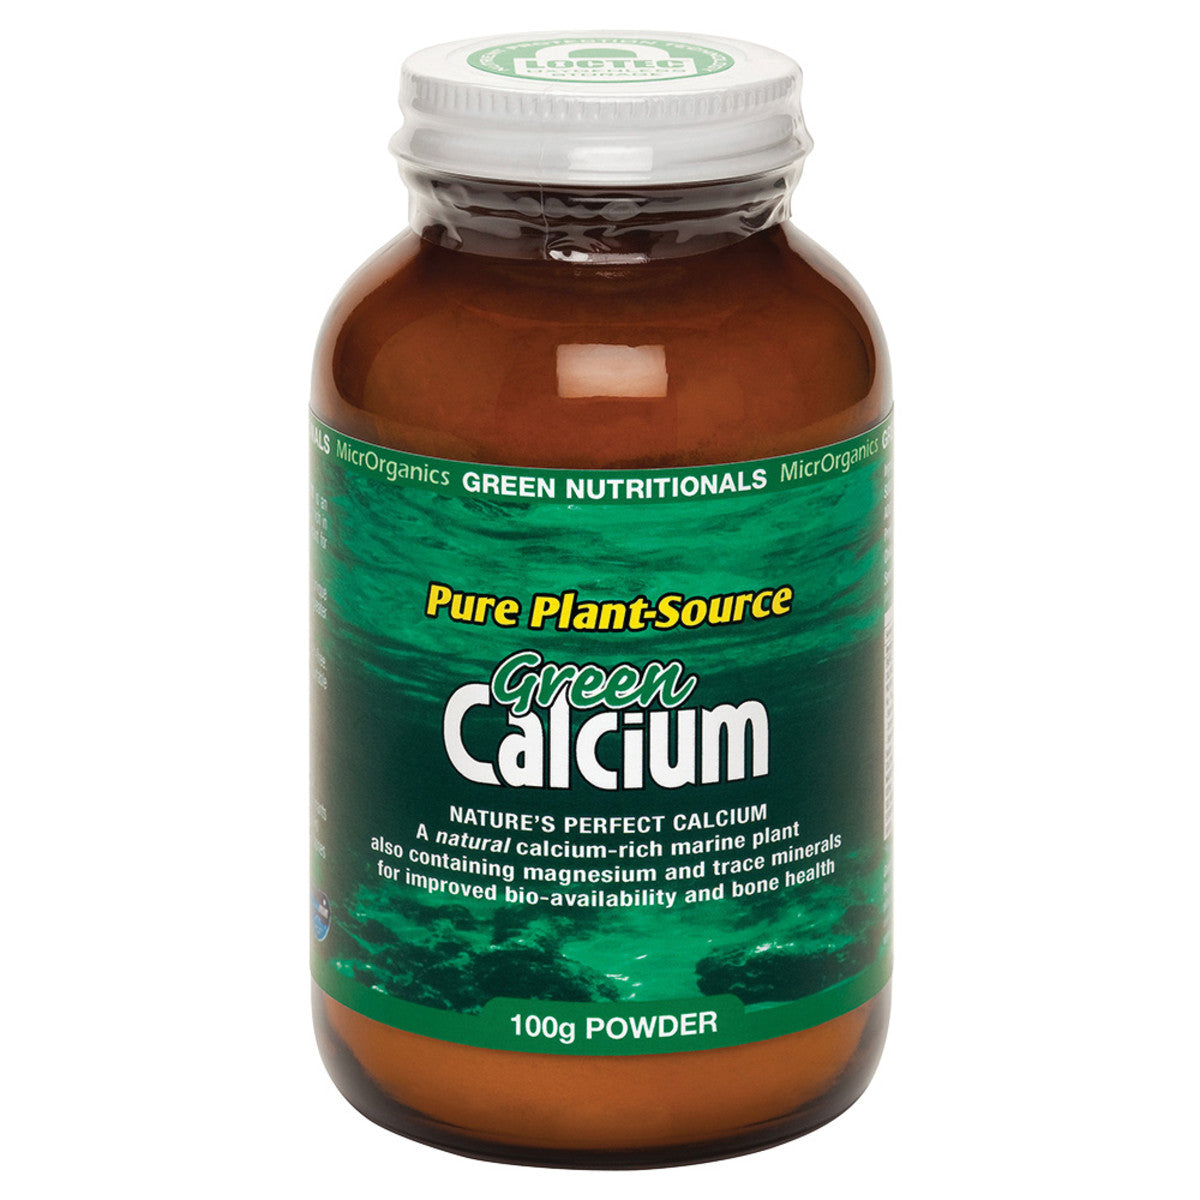 Green Nutritionals - Pure Plant-Source Green Calcium Powder